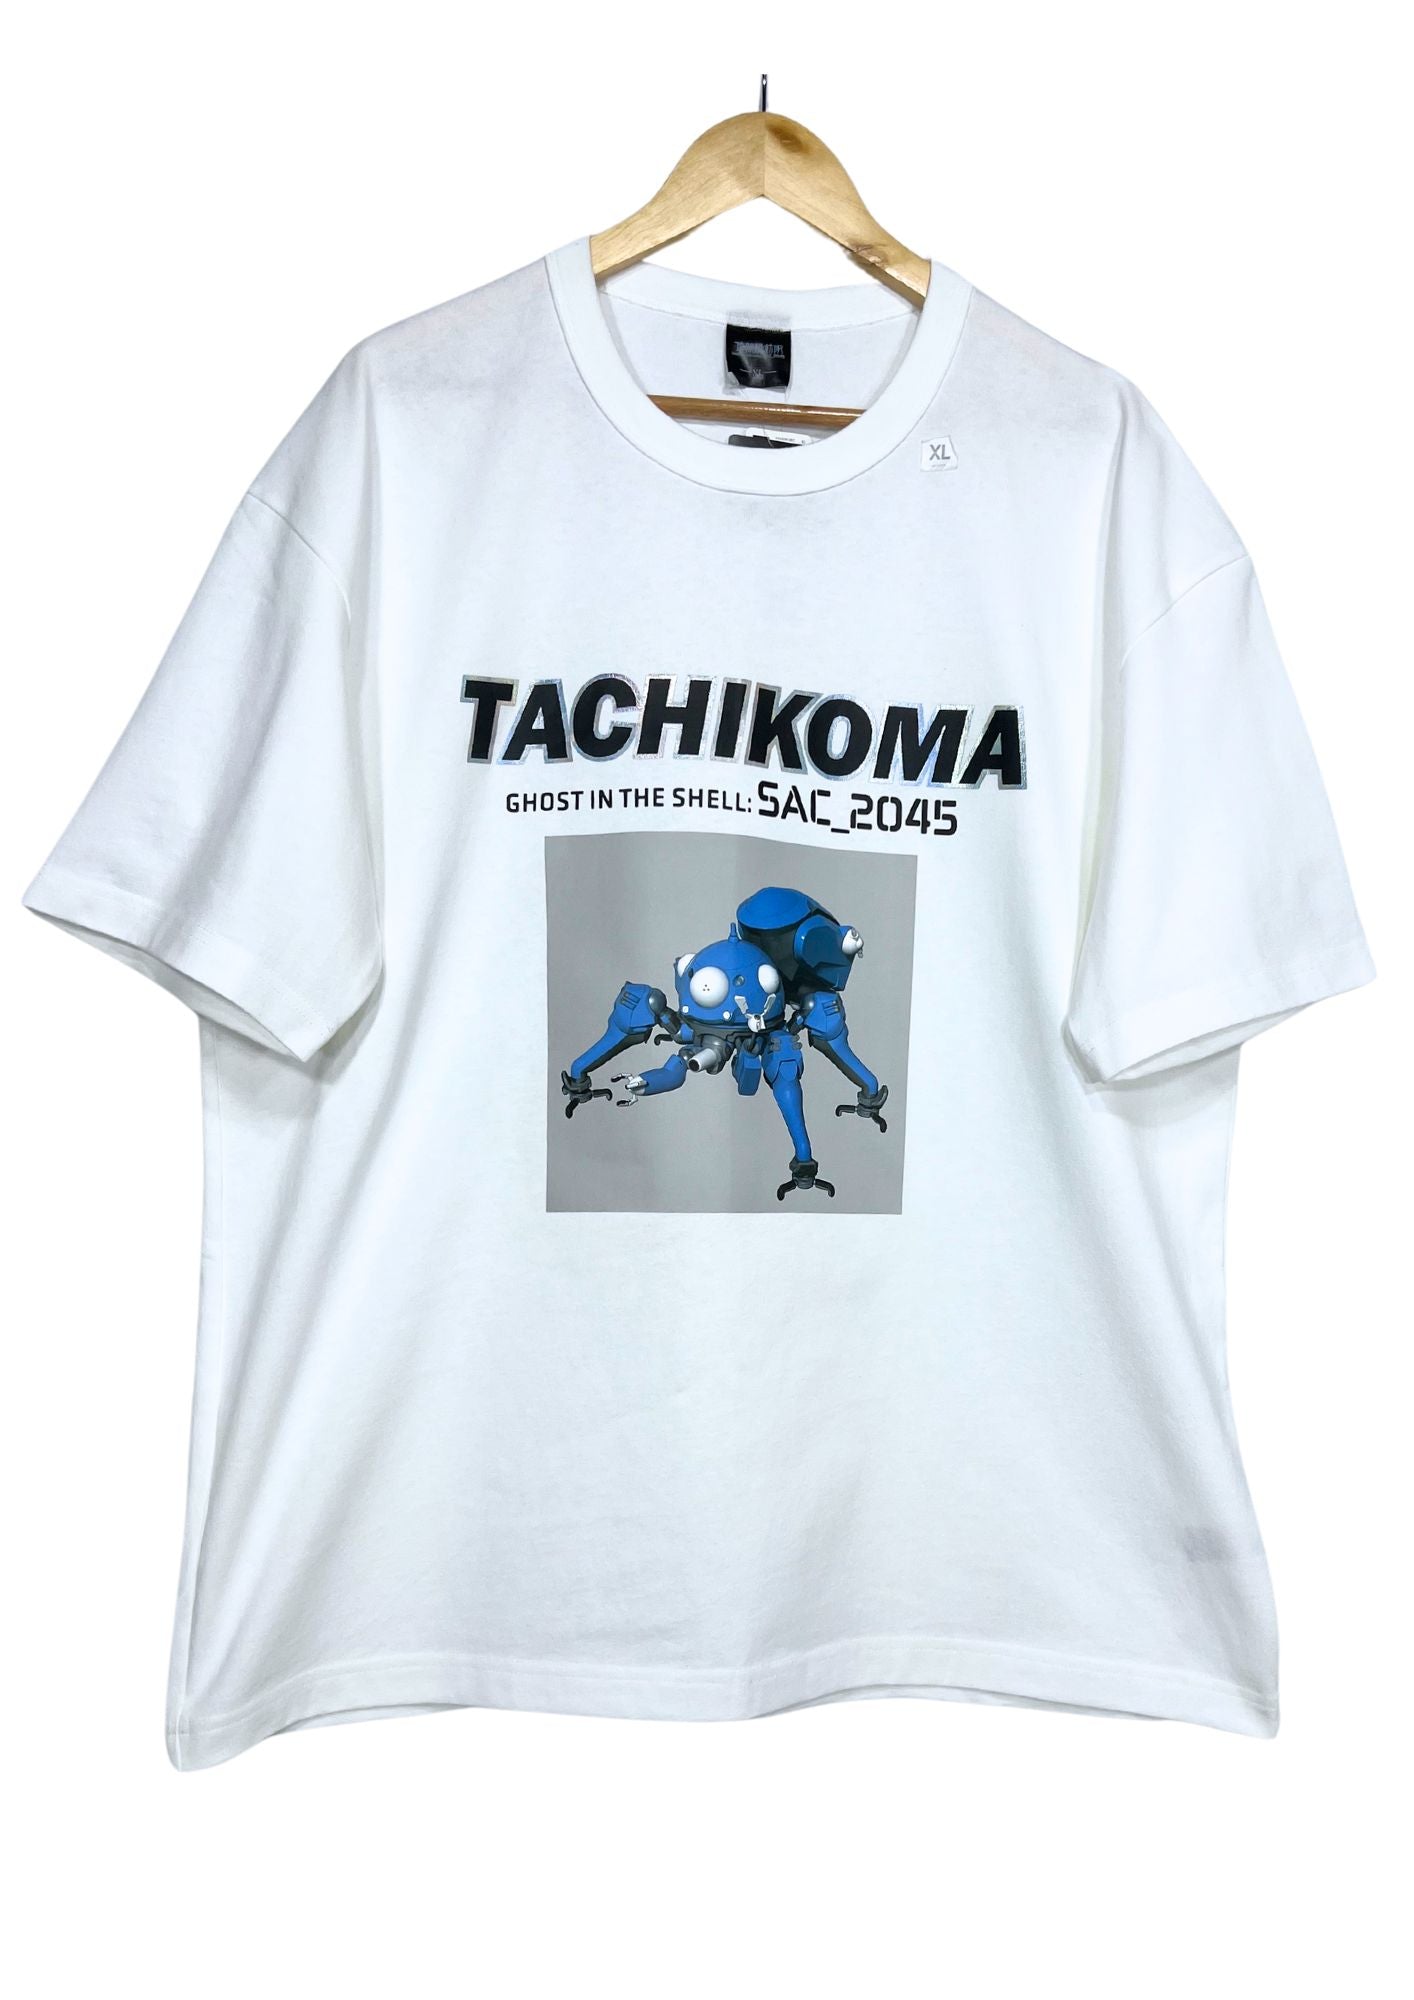 2020 Ghost in the Shell x GU Tachikoma T-shirt